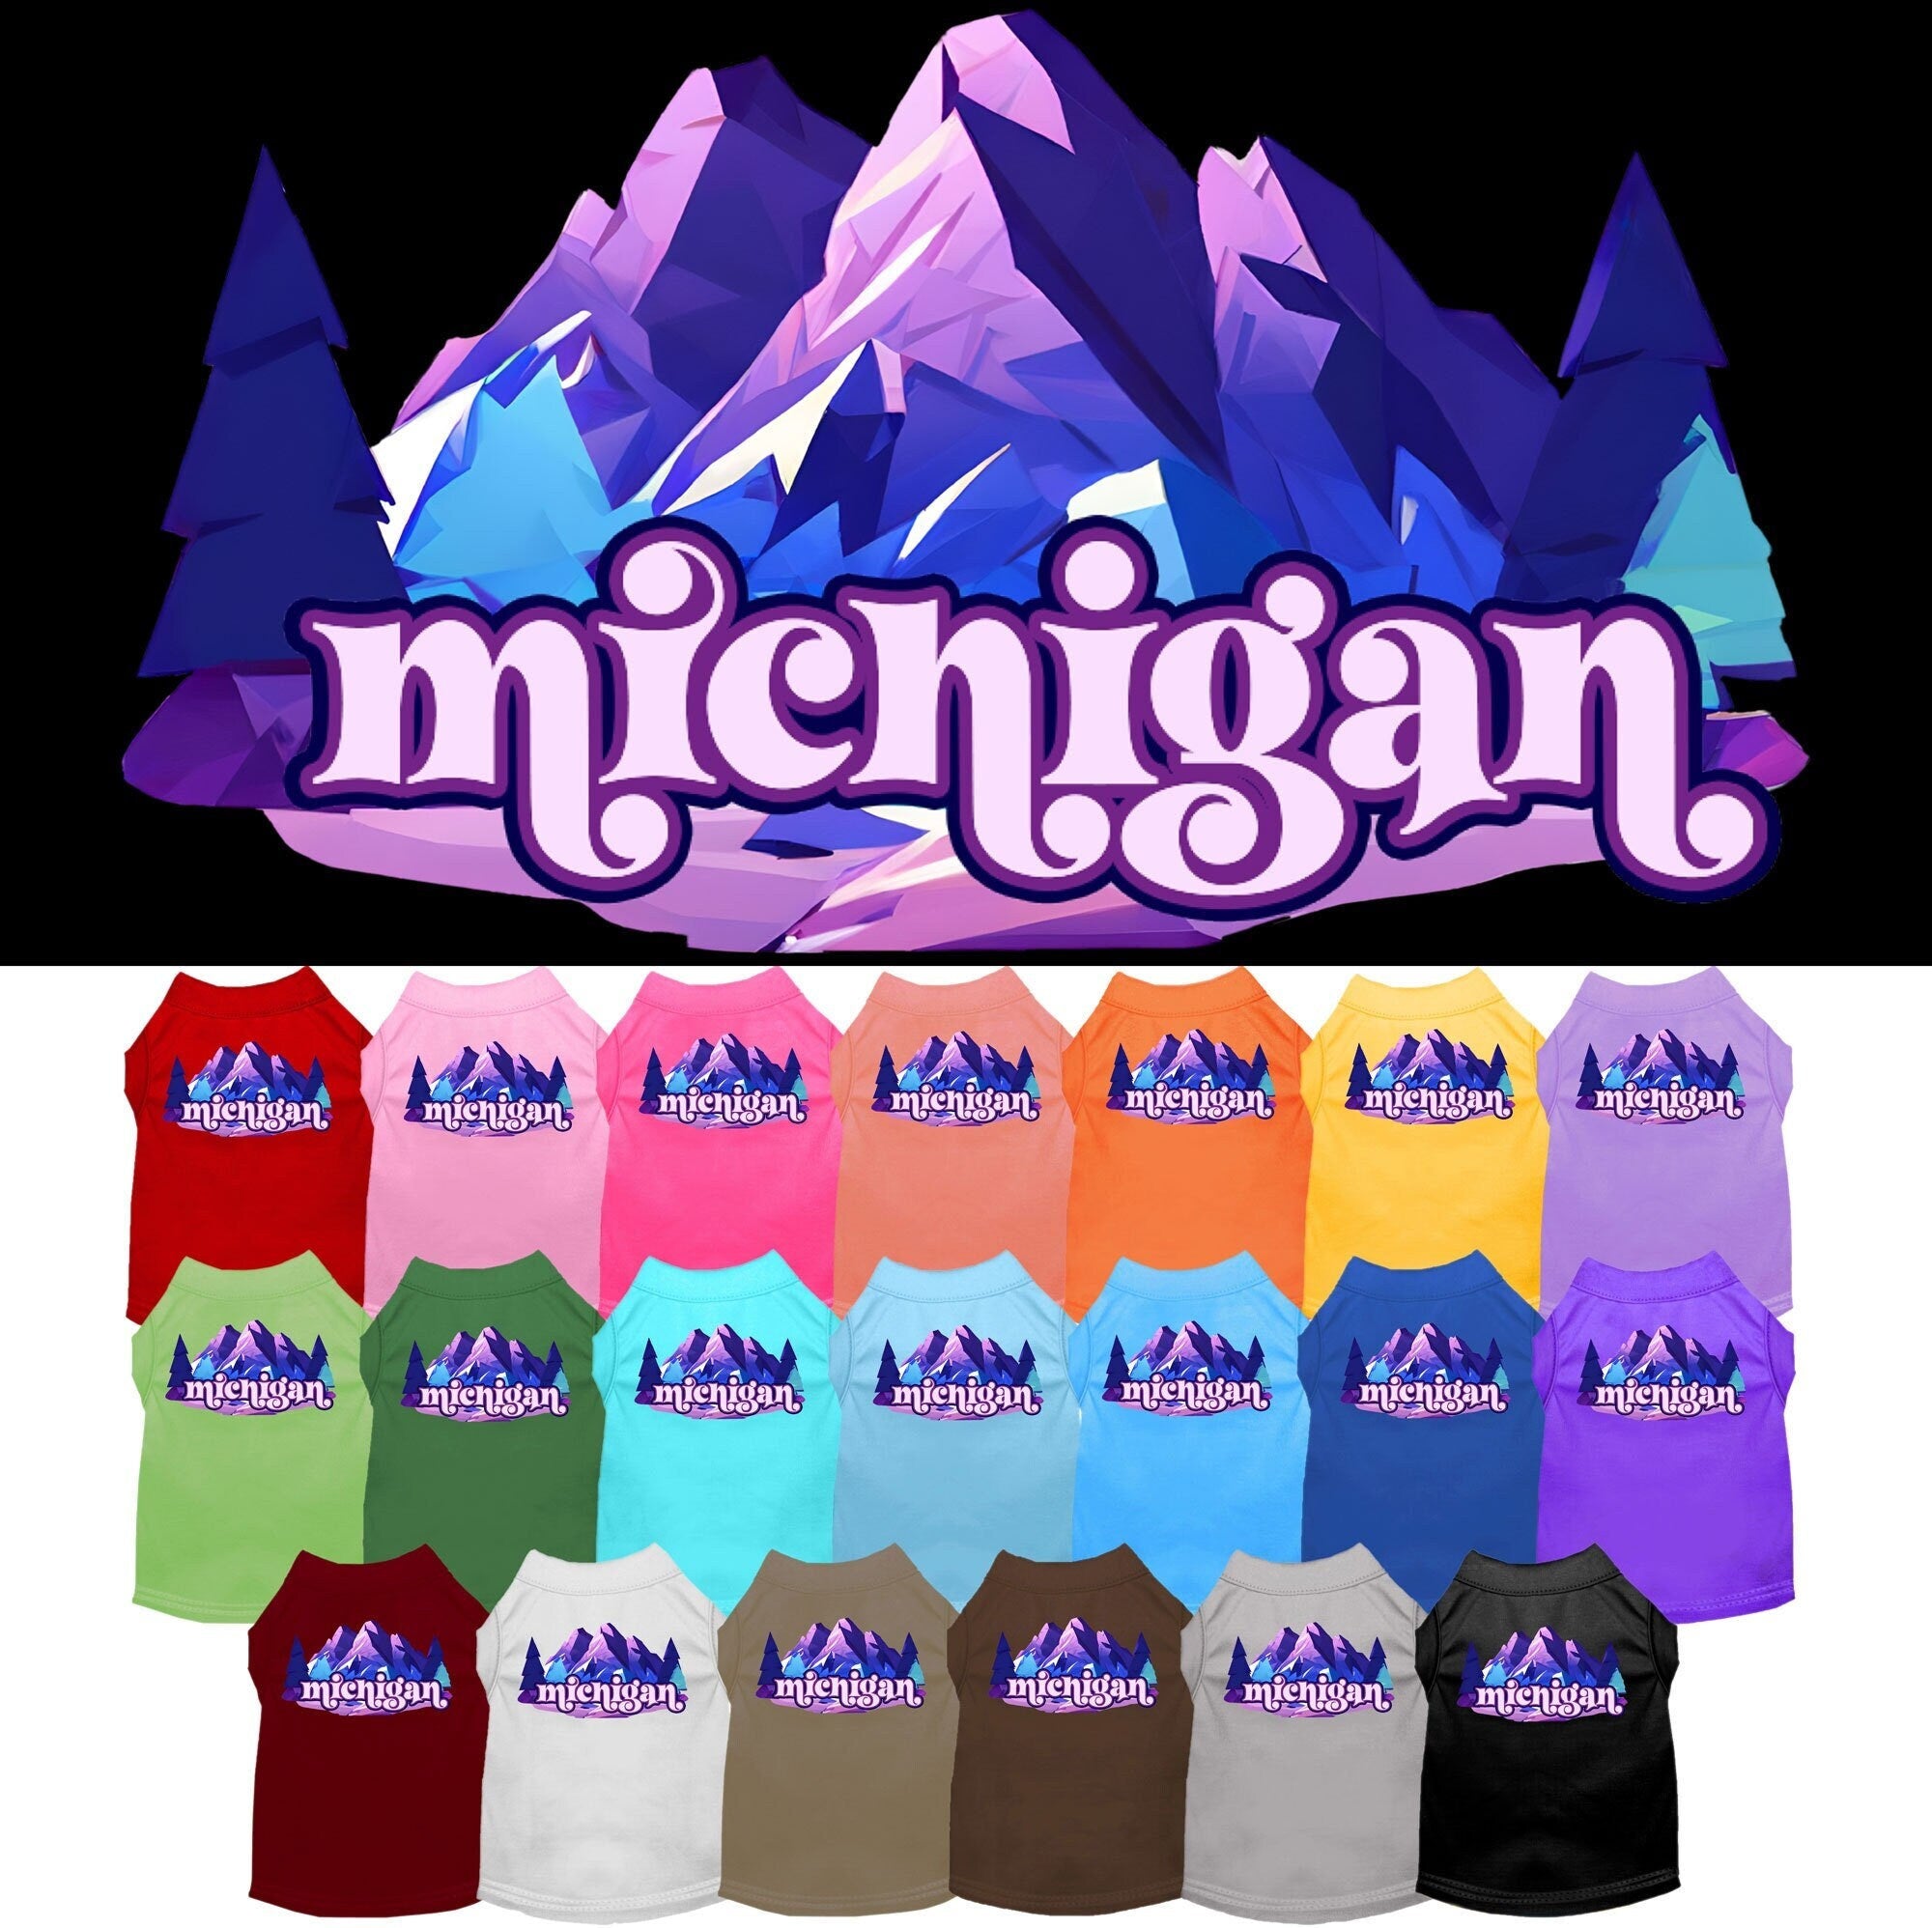 Pet Dog & Cat Screen Printed Shirt, "Michigan Alpine Pawscape"